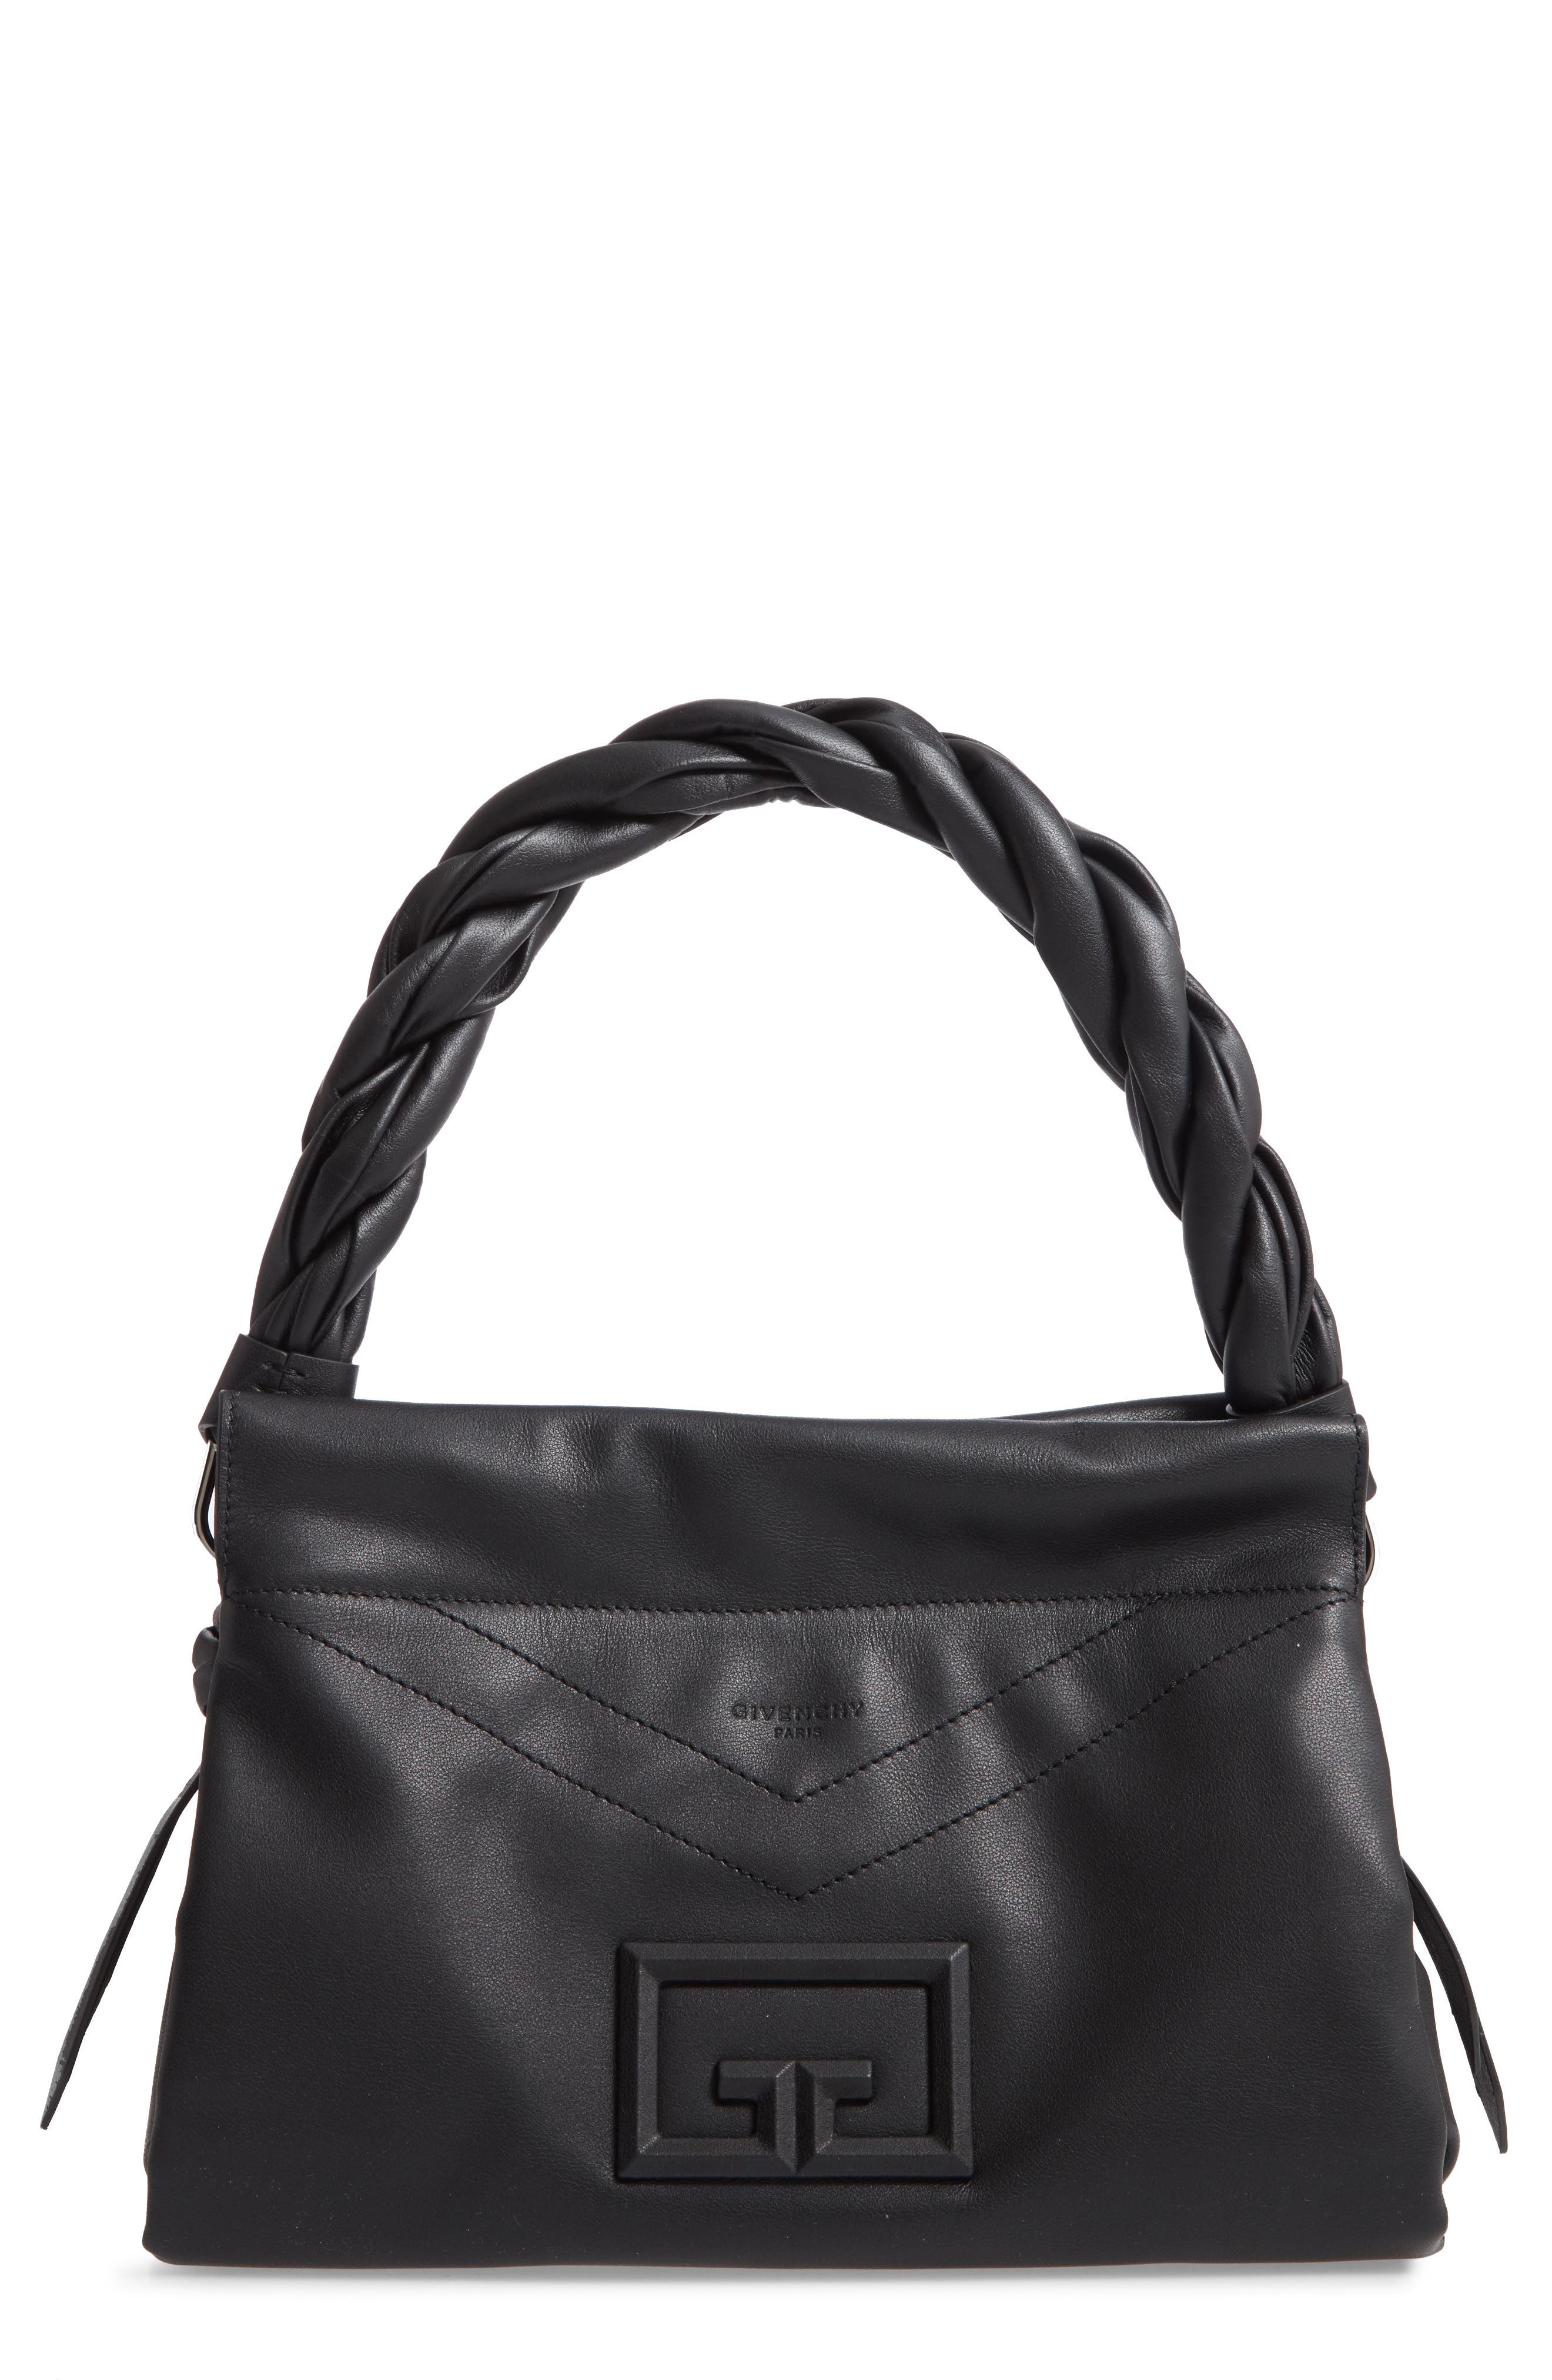 Givenchy ID 93 Medium Leather Handbag | Nordstrom